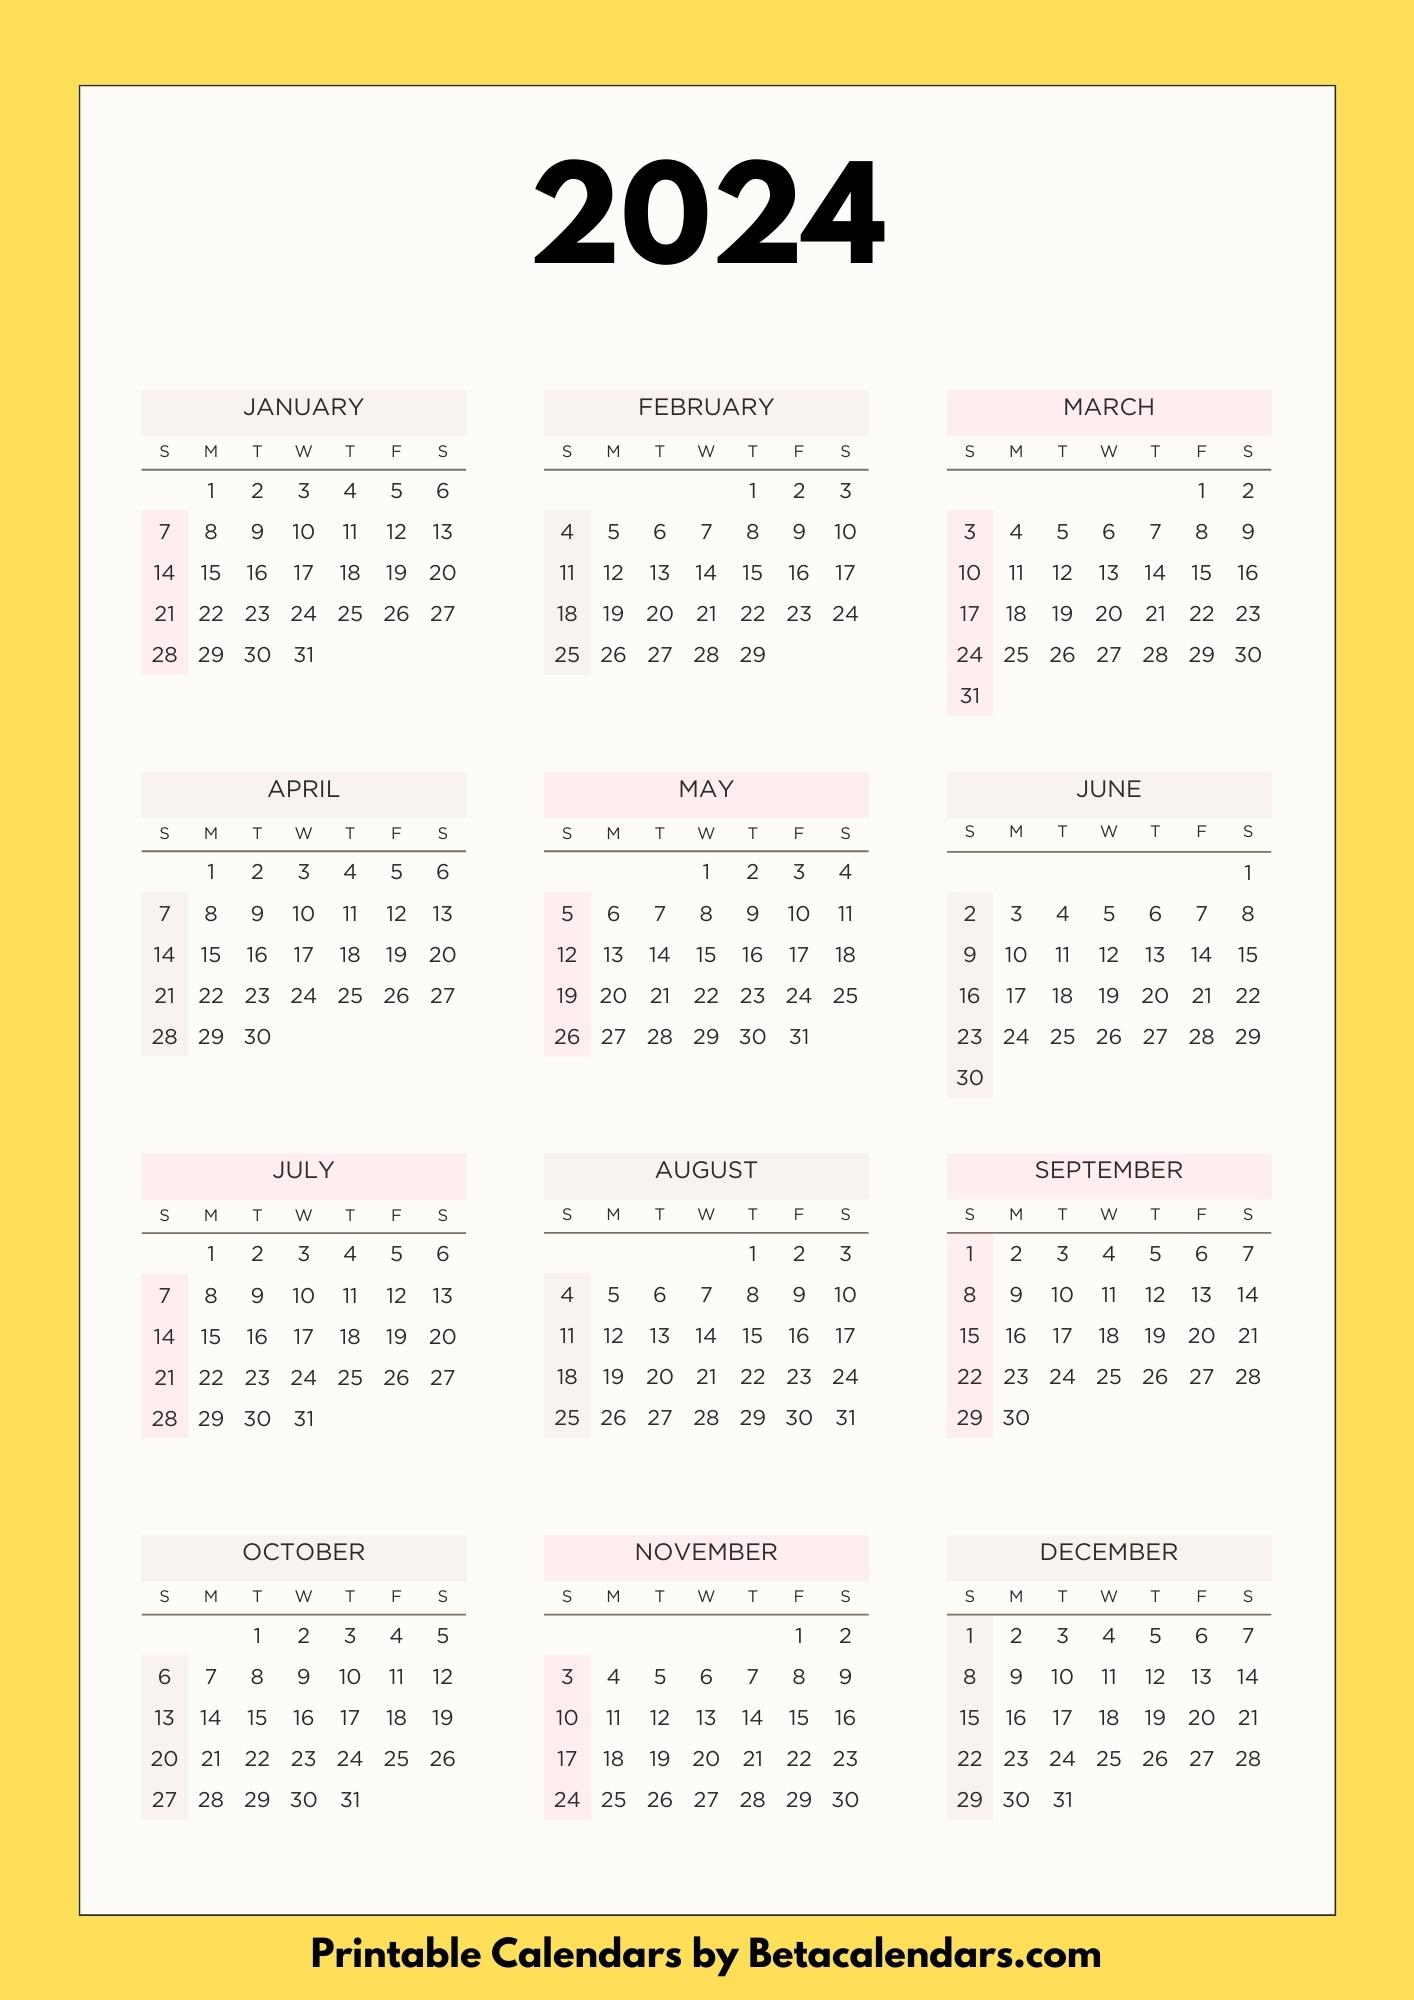 2024 Calendar - Beta Calendars | 2024 Calendars